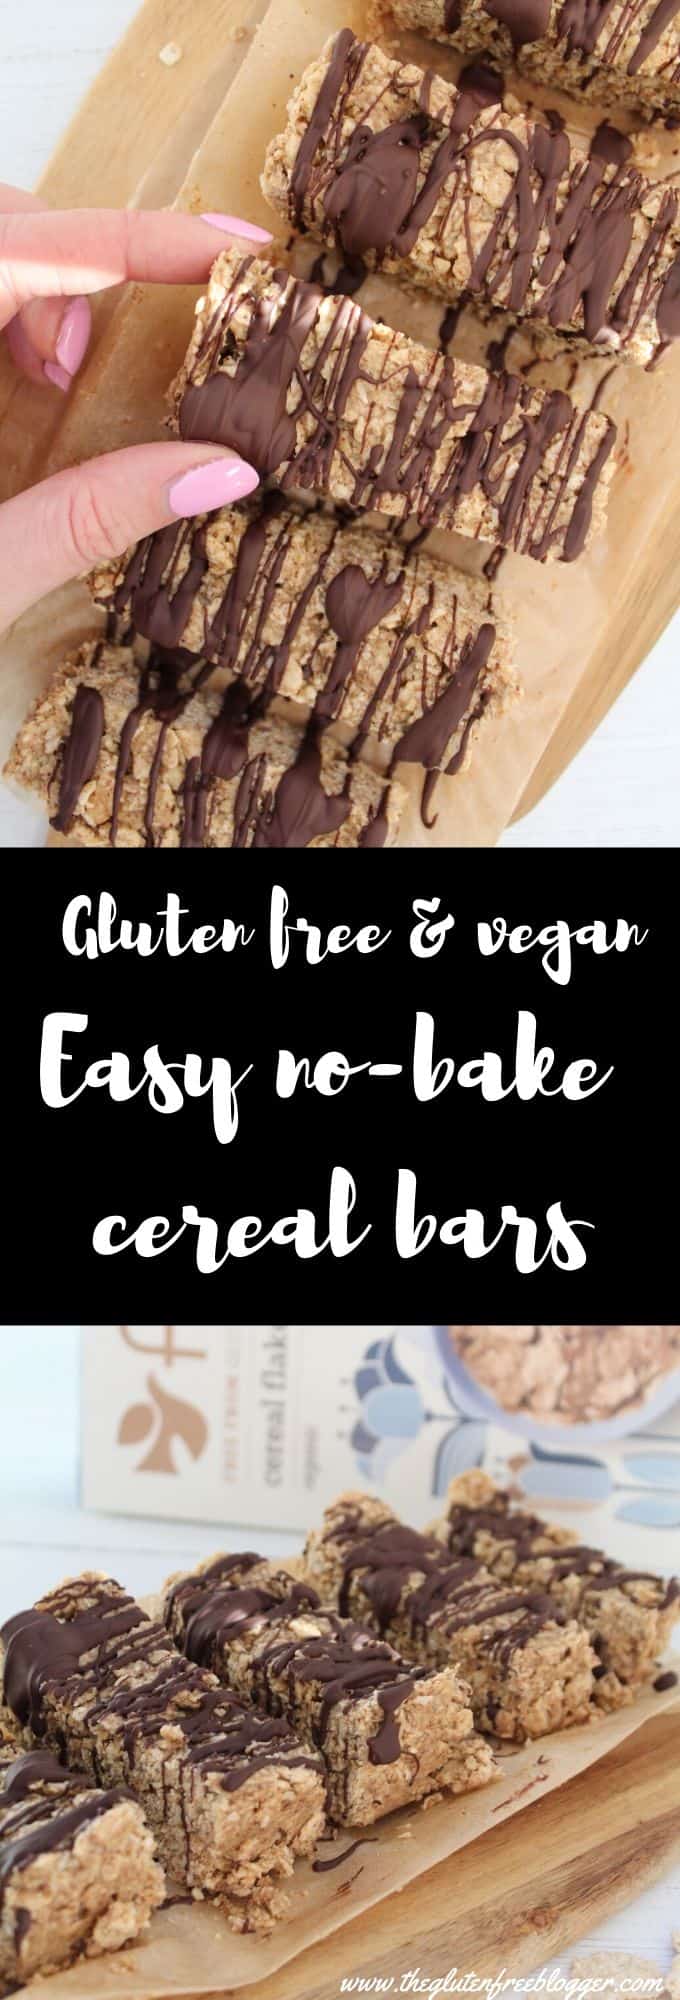 no bake cereal bars breakfast bars recipe gluten free breakfast ideas coeliac dairy free